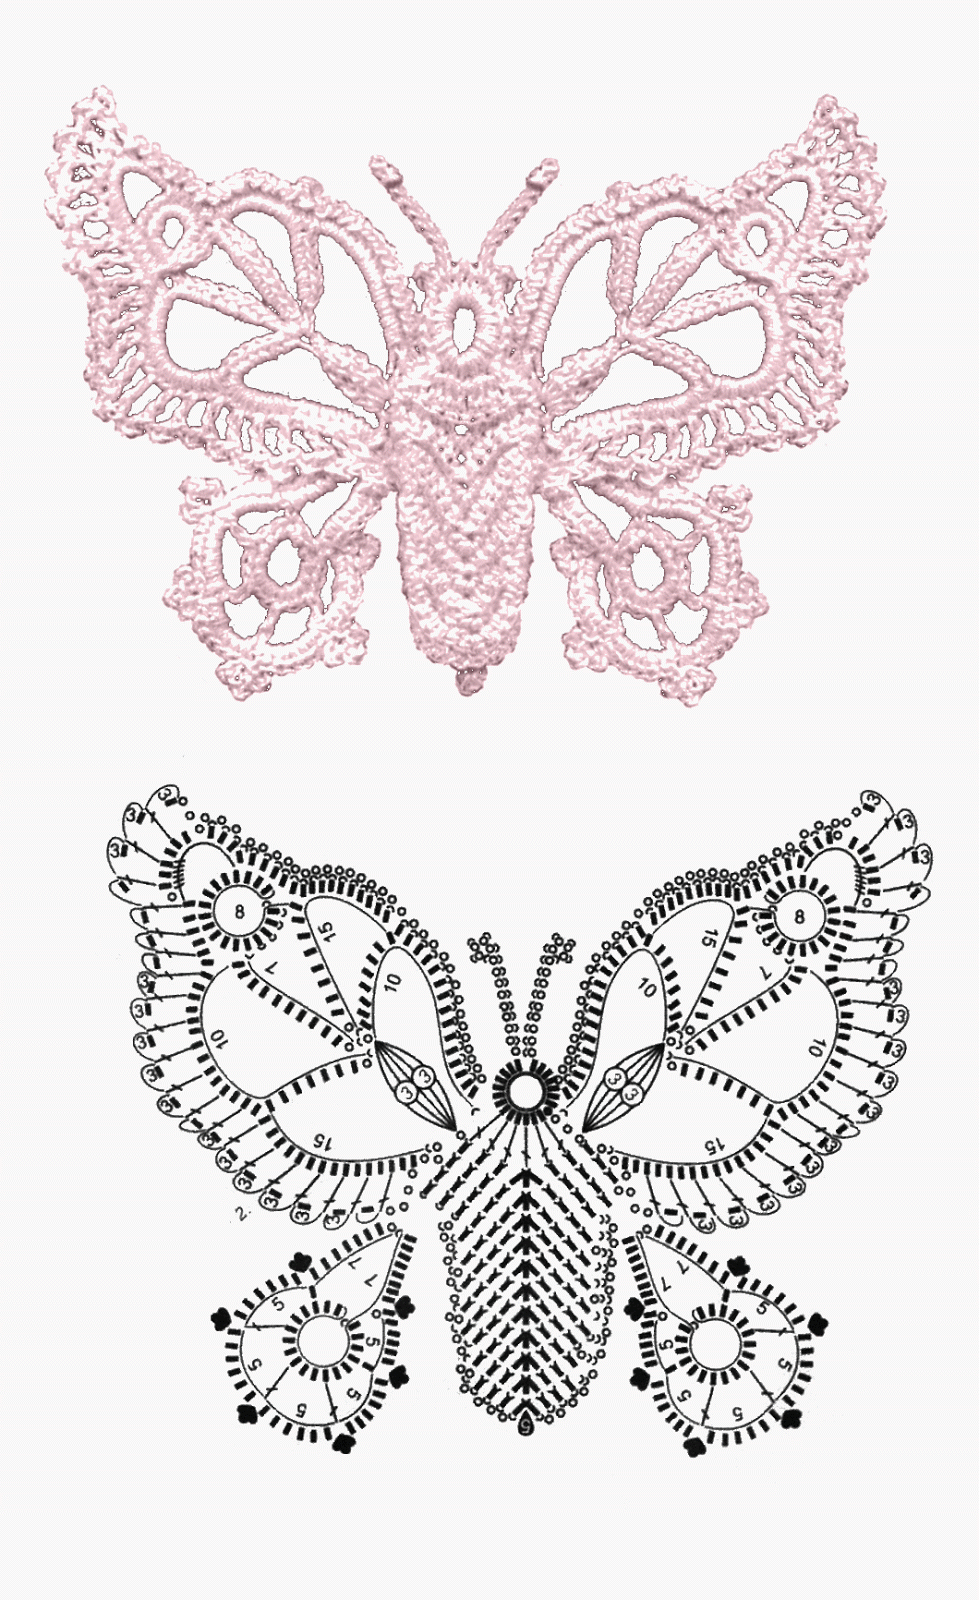 Бабочки крючком - схемы игрушек амигуруми